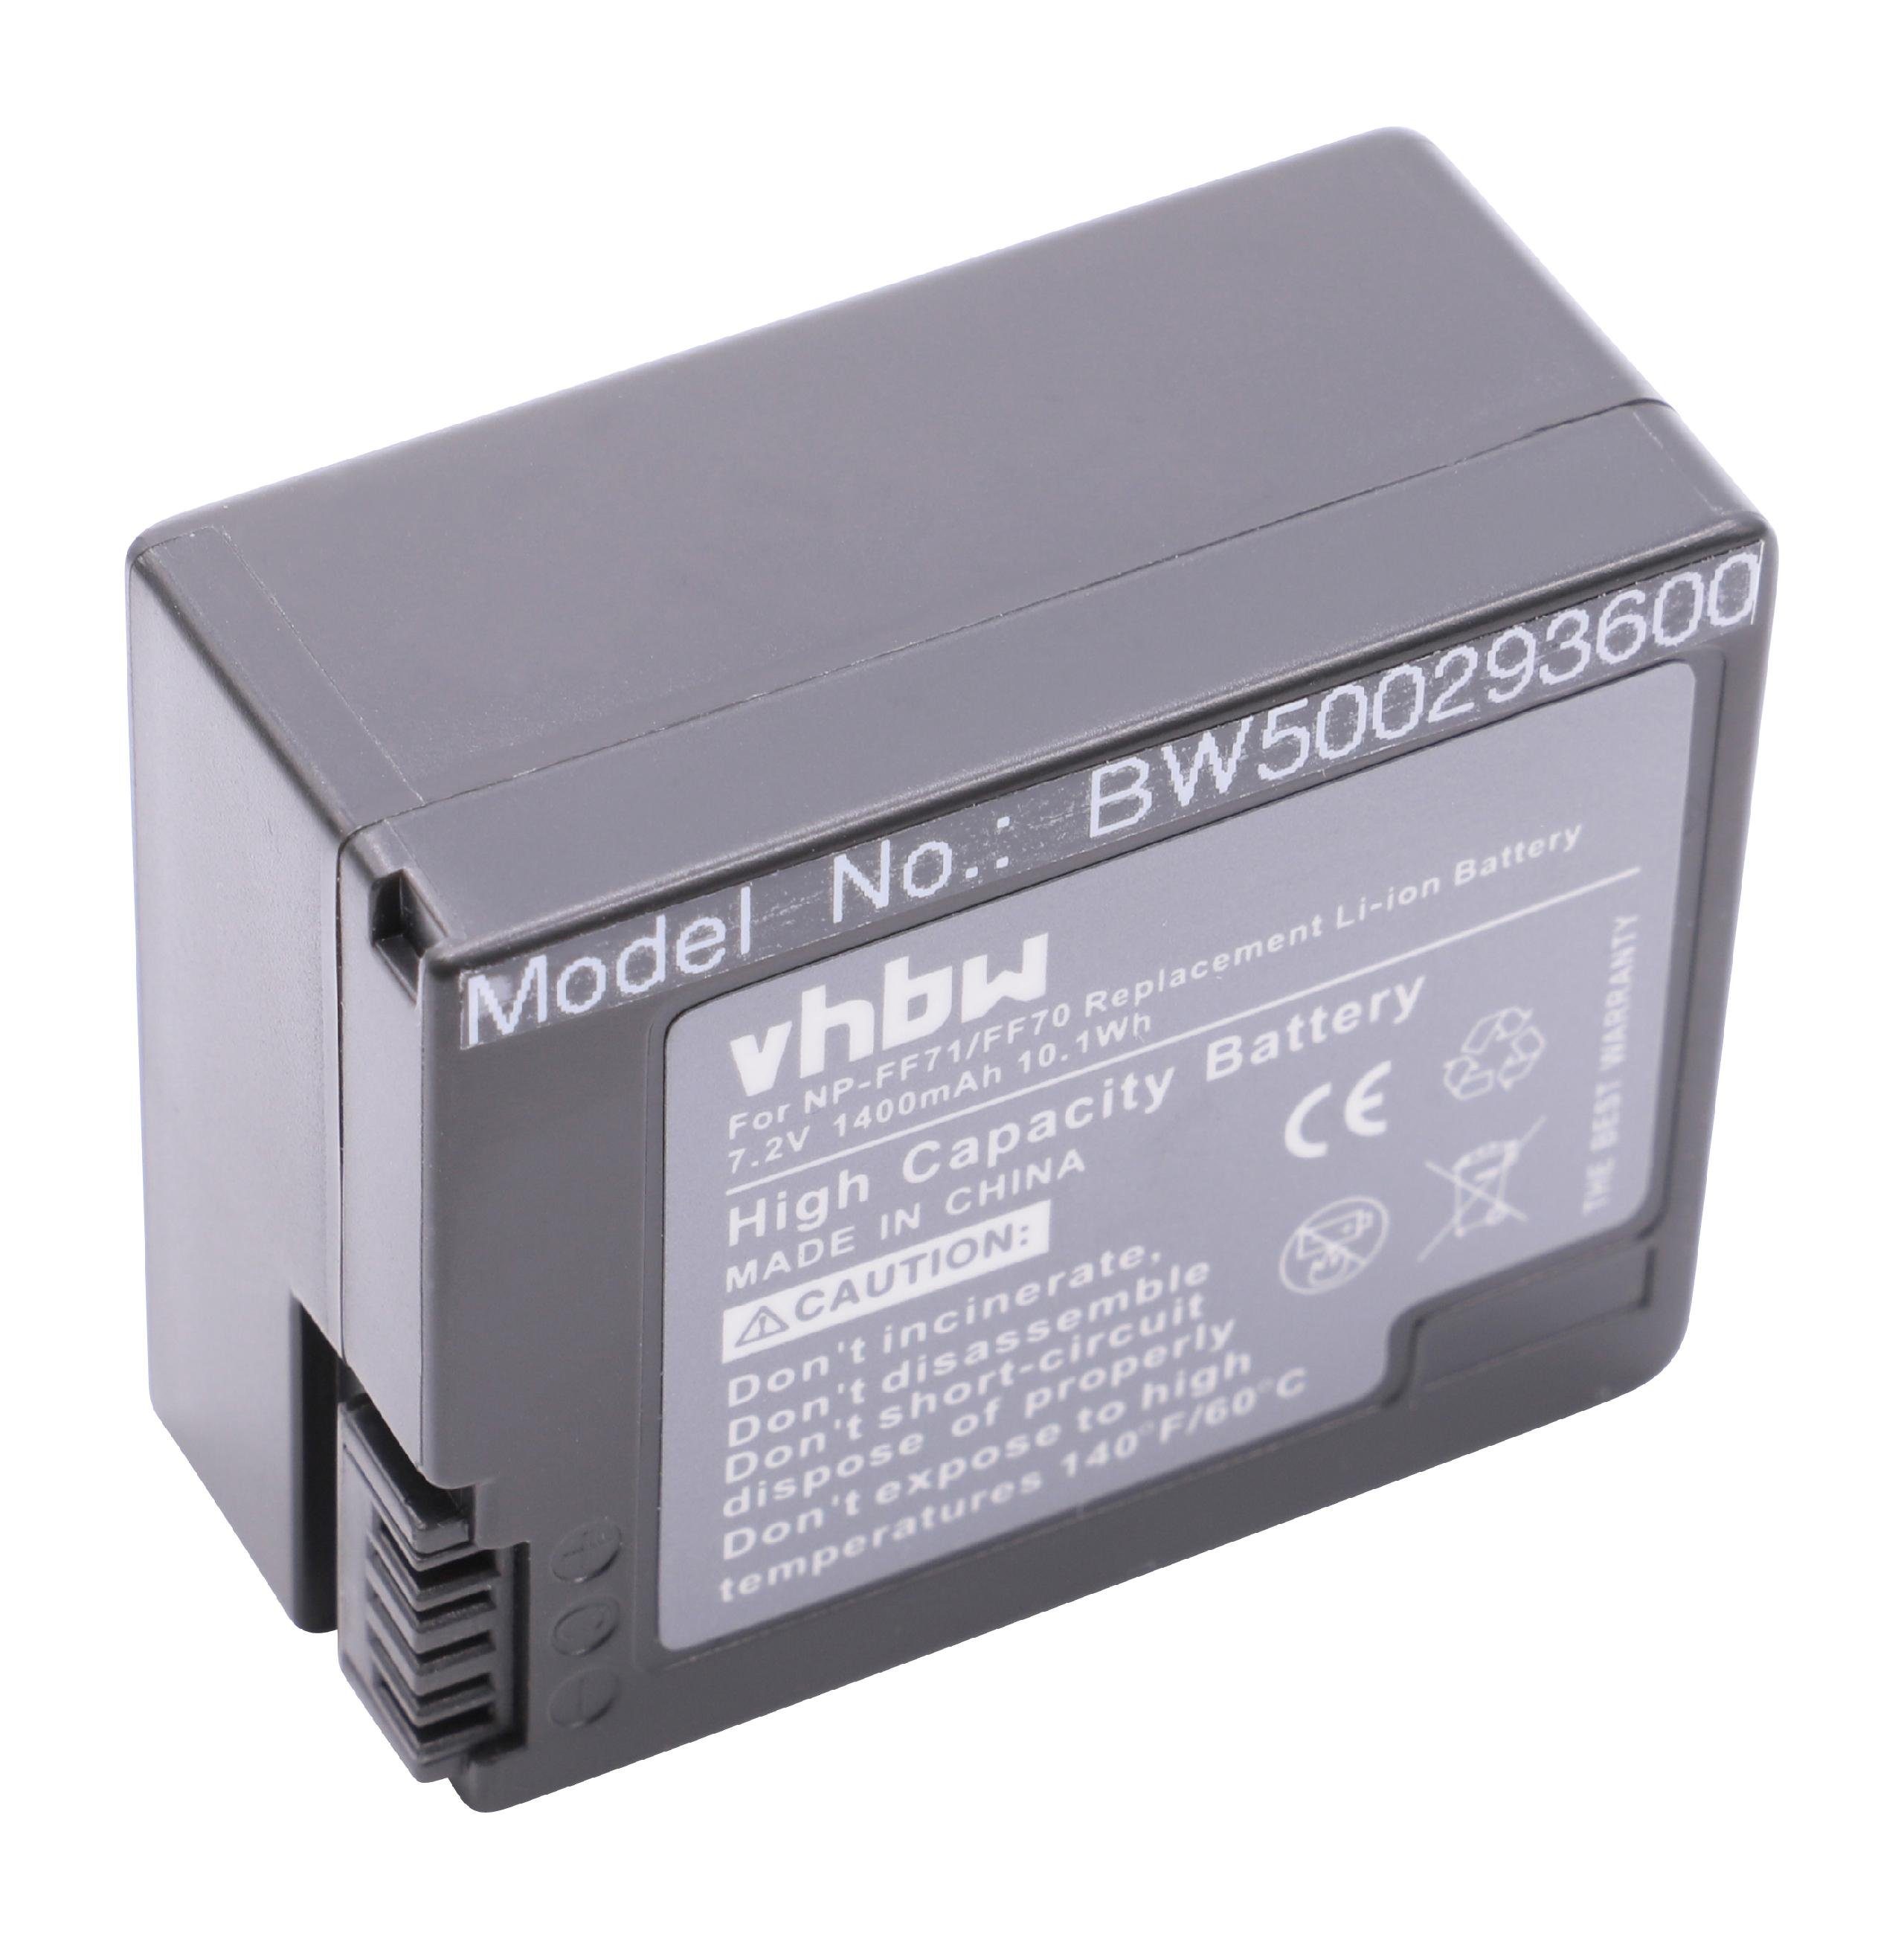 vhbw passend für Sony DCR-IP1, DCR-IP1K, DCR-IP210, DCR-IP210E, DCR-IP220, DCR-HC1000 Camcorder (1400mAh, 7,2V, Li-Ion) Kamera-Akku 1400 mAh